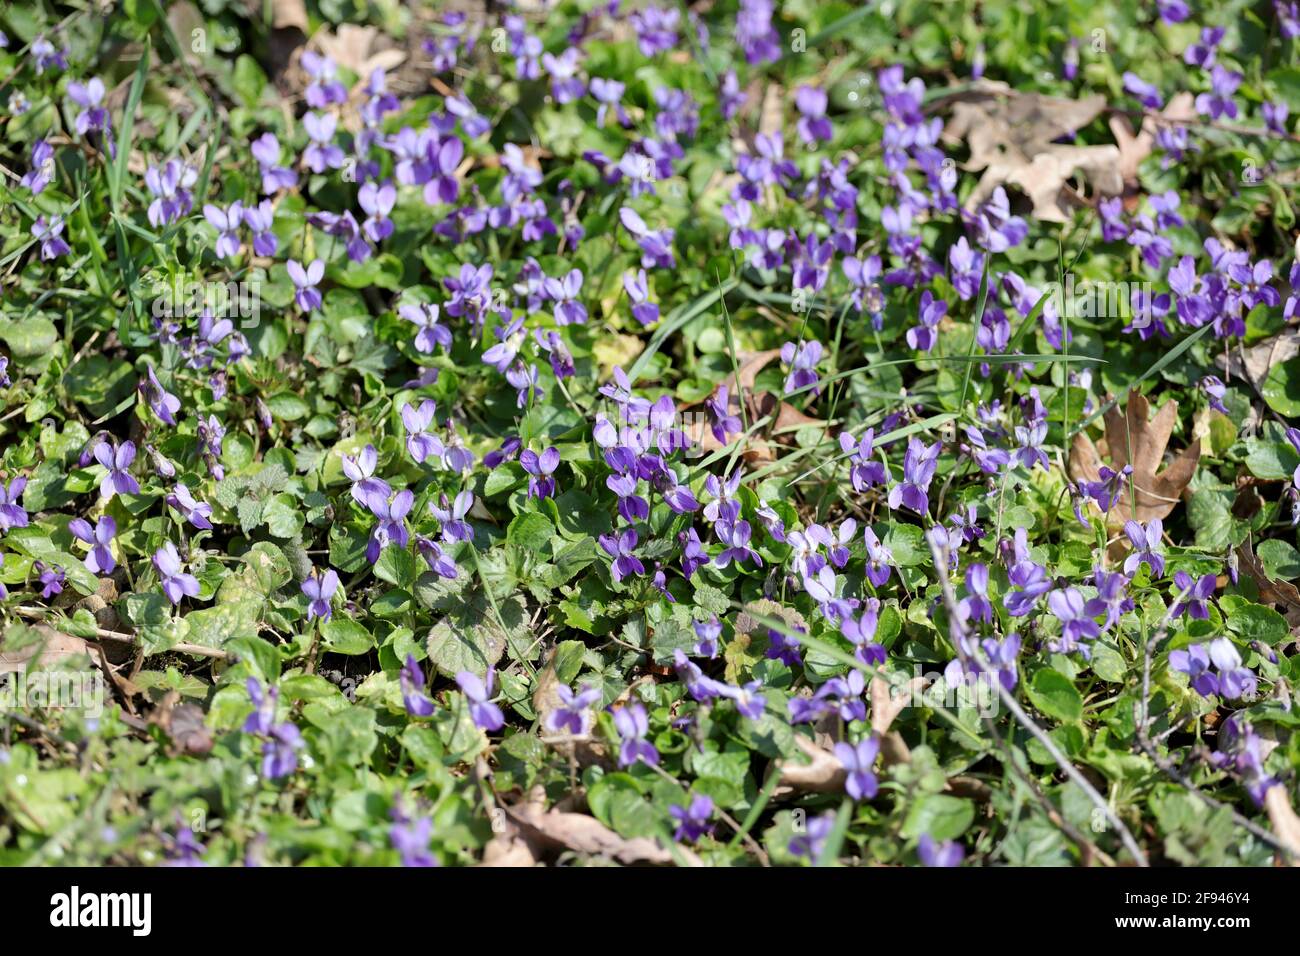 Wild purple violets in nature, close up. No sharpen Stock Photo